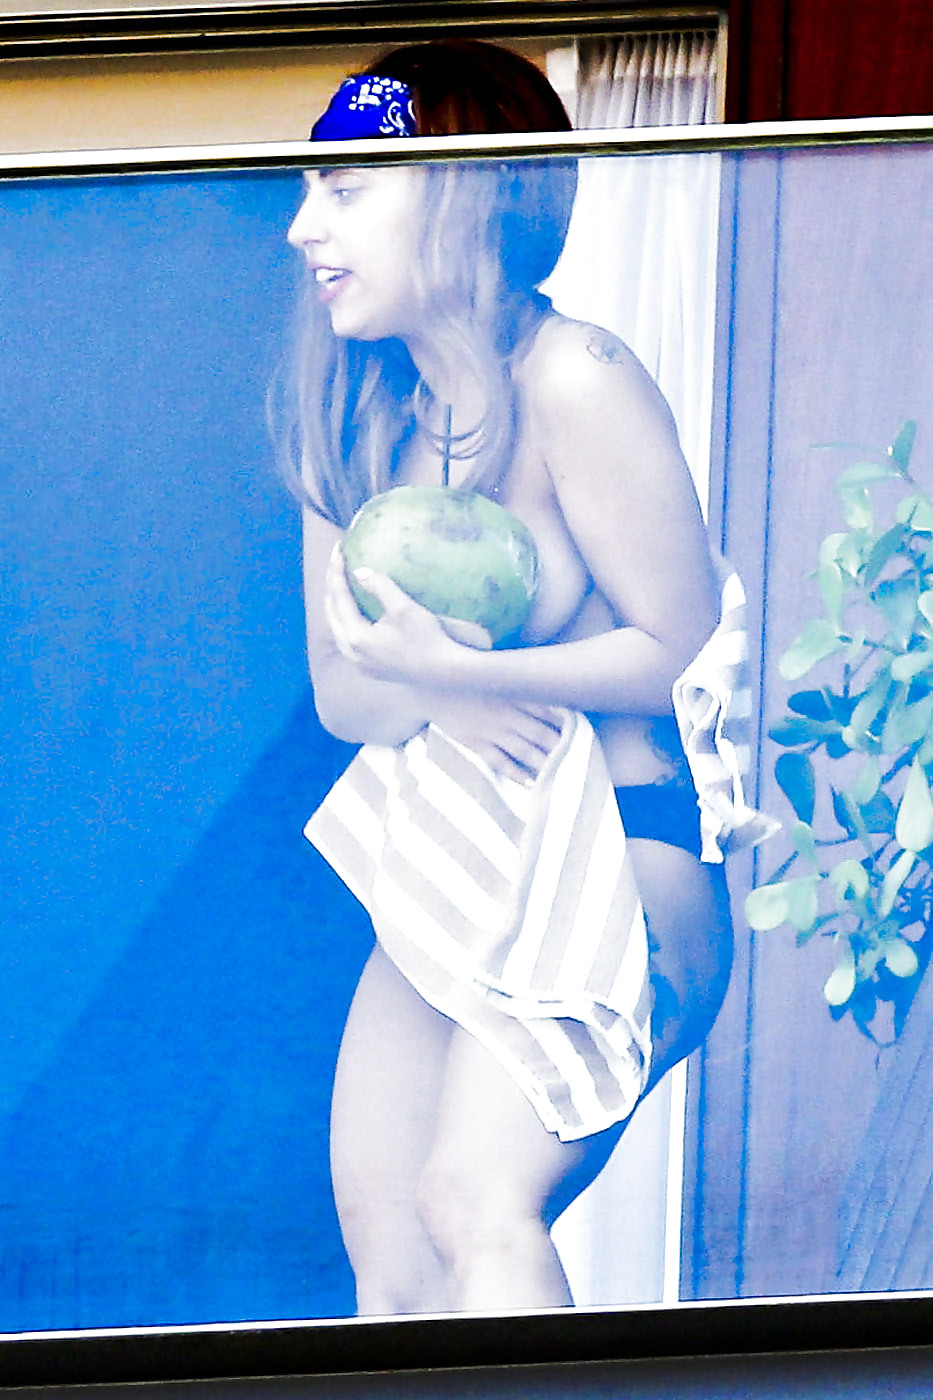 Lady Gaga Goes Nearly Nude on Hotel Balcony #17503967